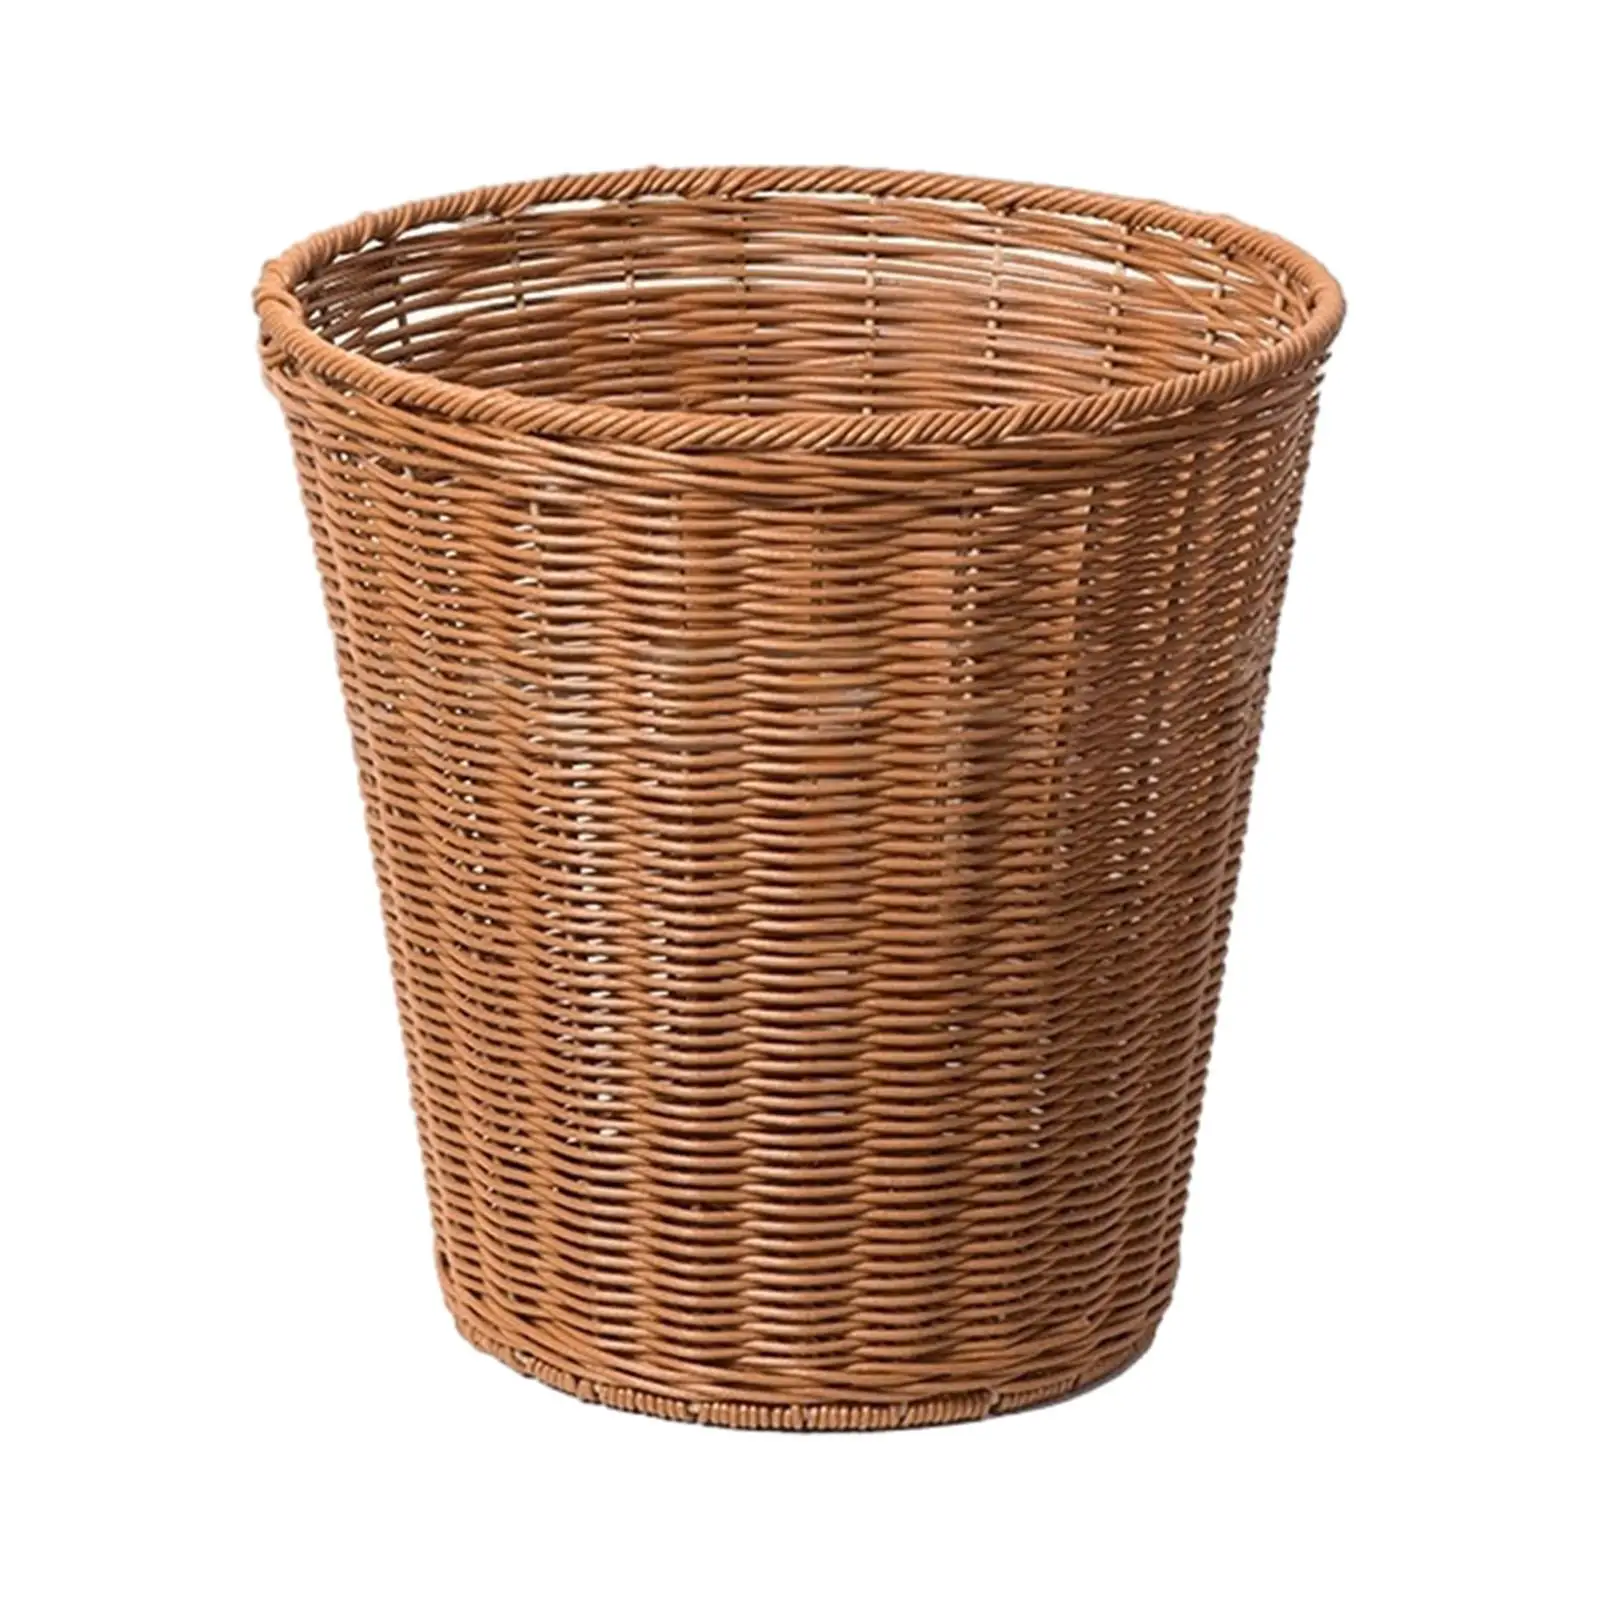 Wicker Trash Can Round Imitation Rattan Waste Basket Woven Wastebasket for Living Room Laundry Room Bathroom Dorm Bedroom